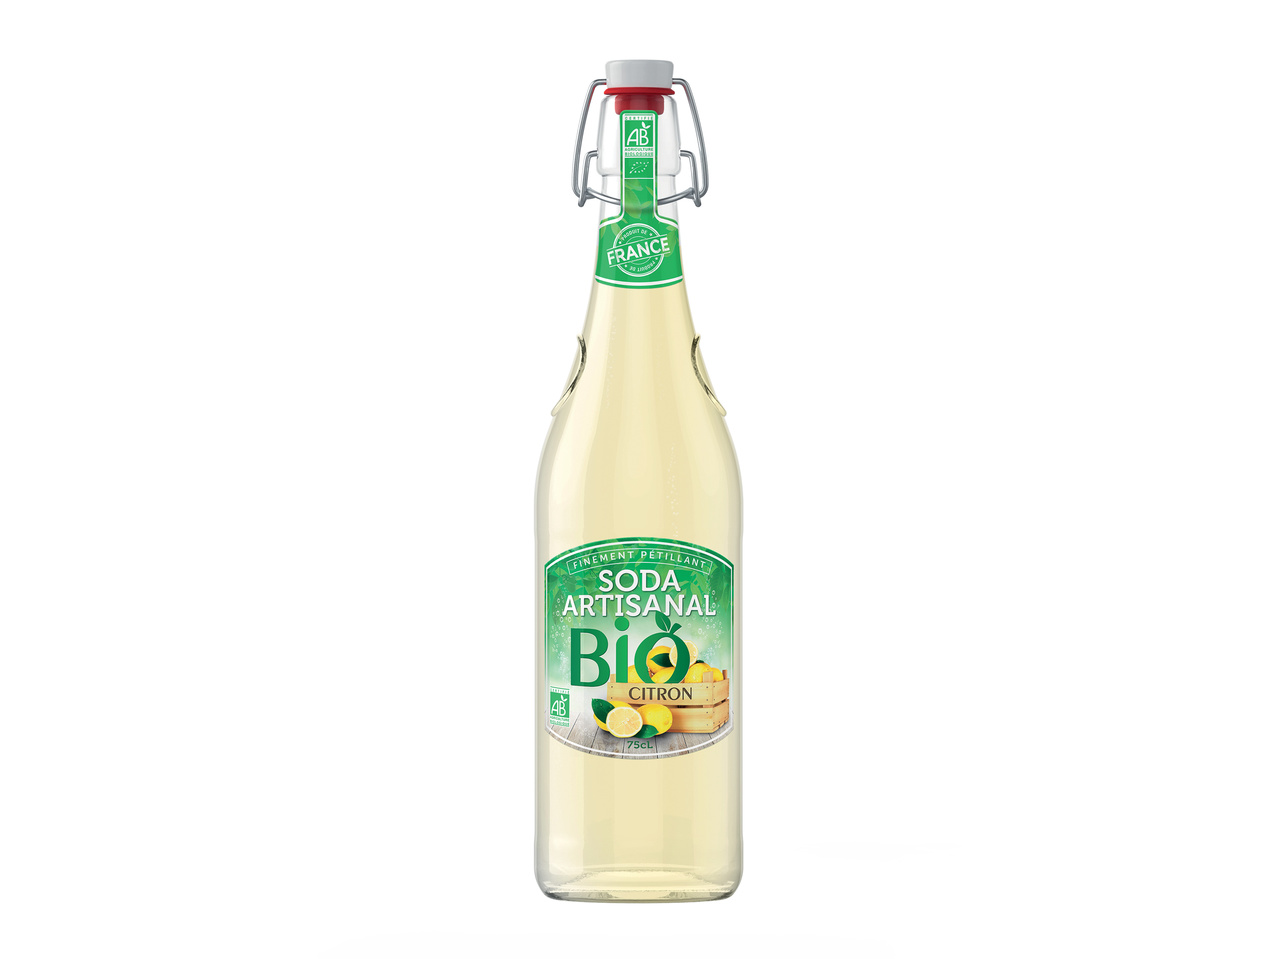 Limonade artisanale Bio ou soda artisanal Bio citron1